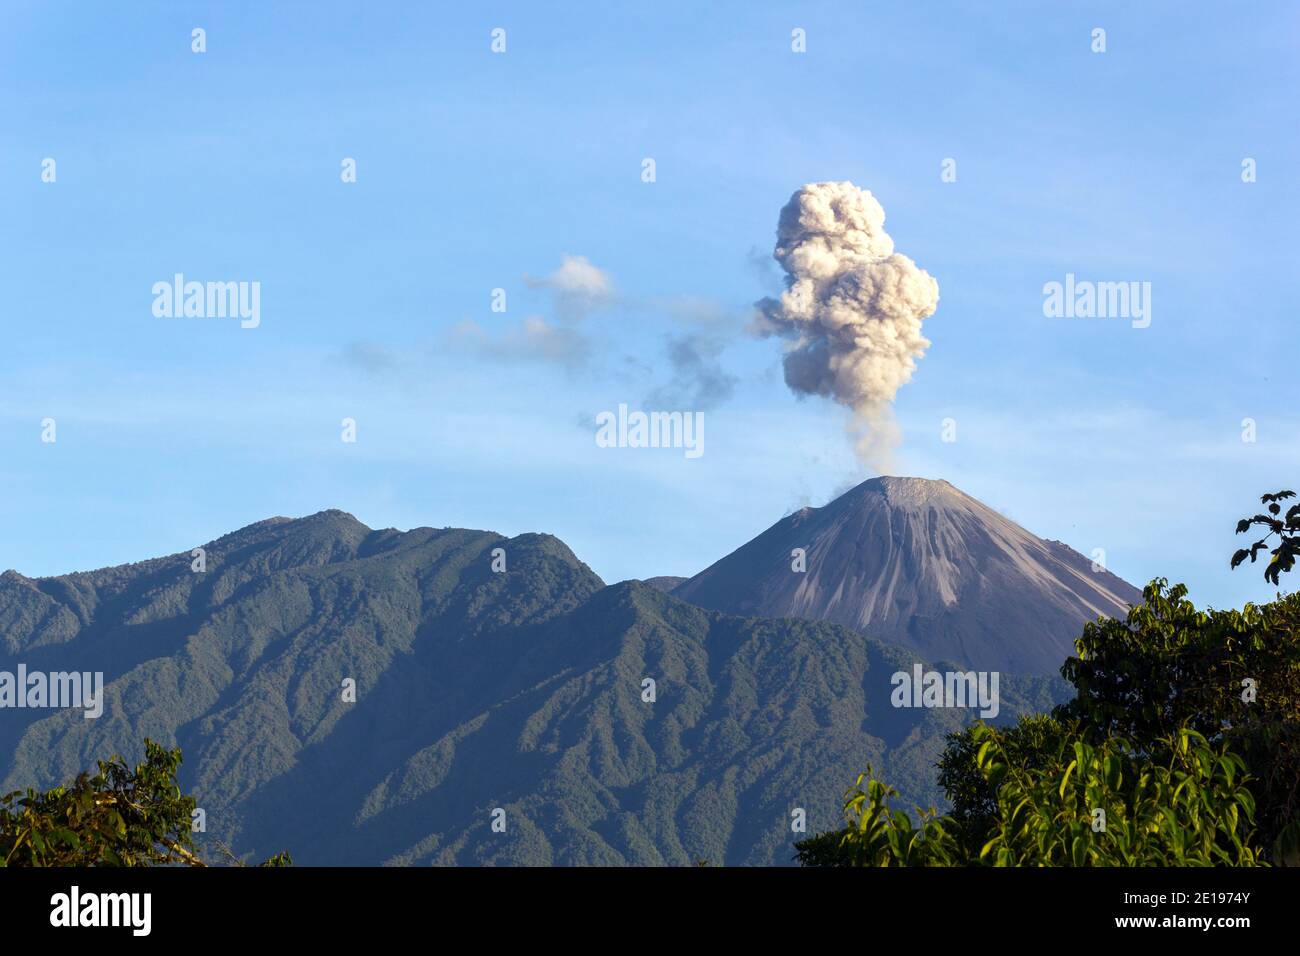 Reventador Volcano erupting, November 2015. Situated in a remote region of the Ecuadorian Amazon, Reventador has been erupting since 2002. Stock Photo